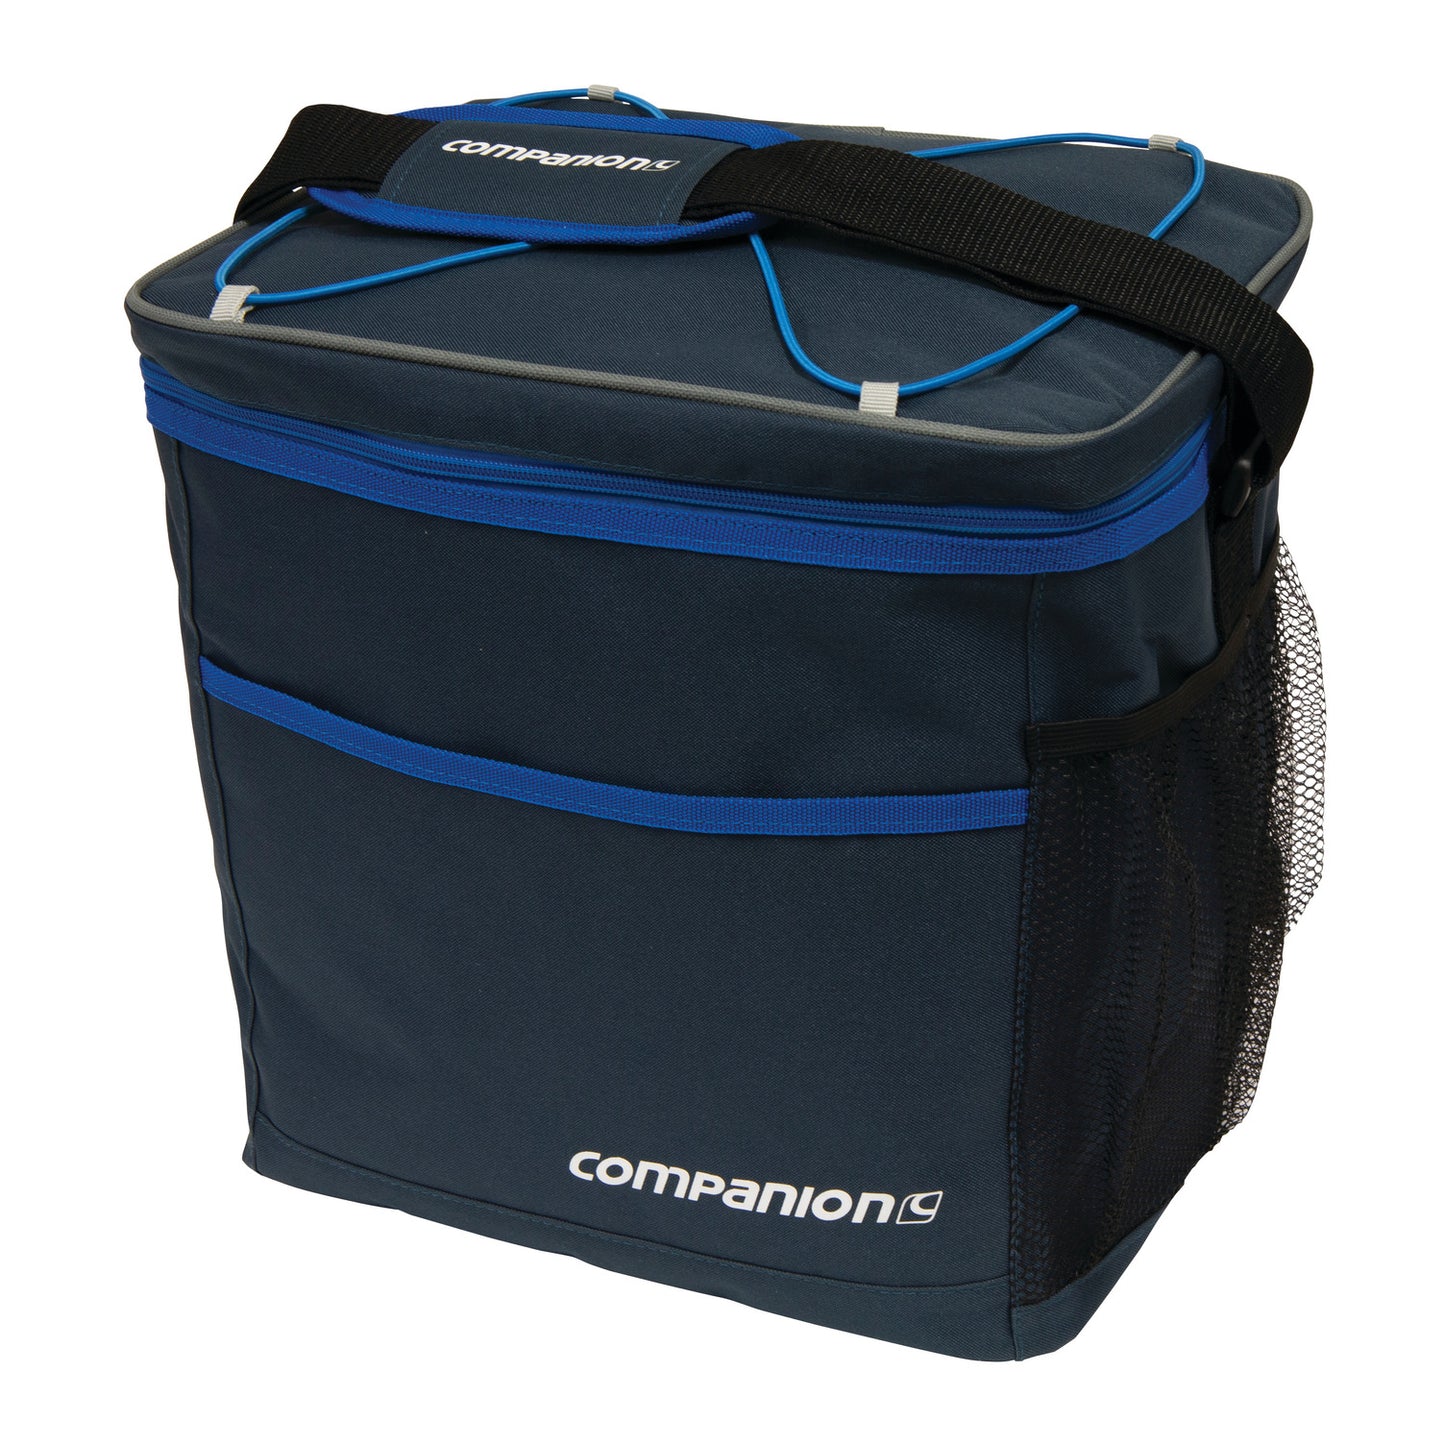 Companion Crossover Cooler